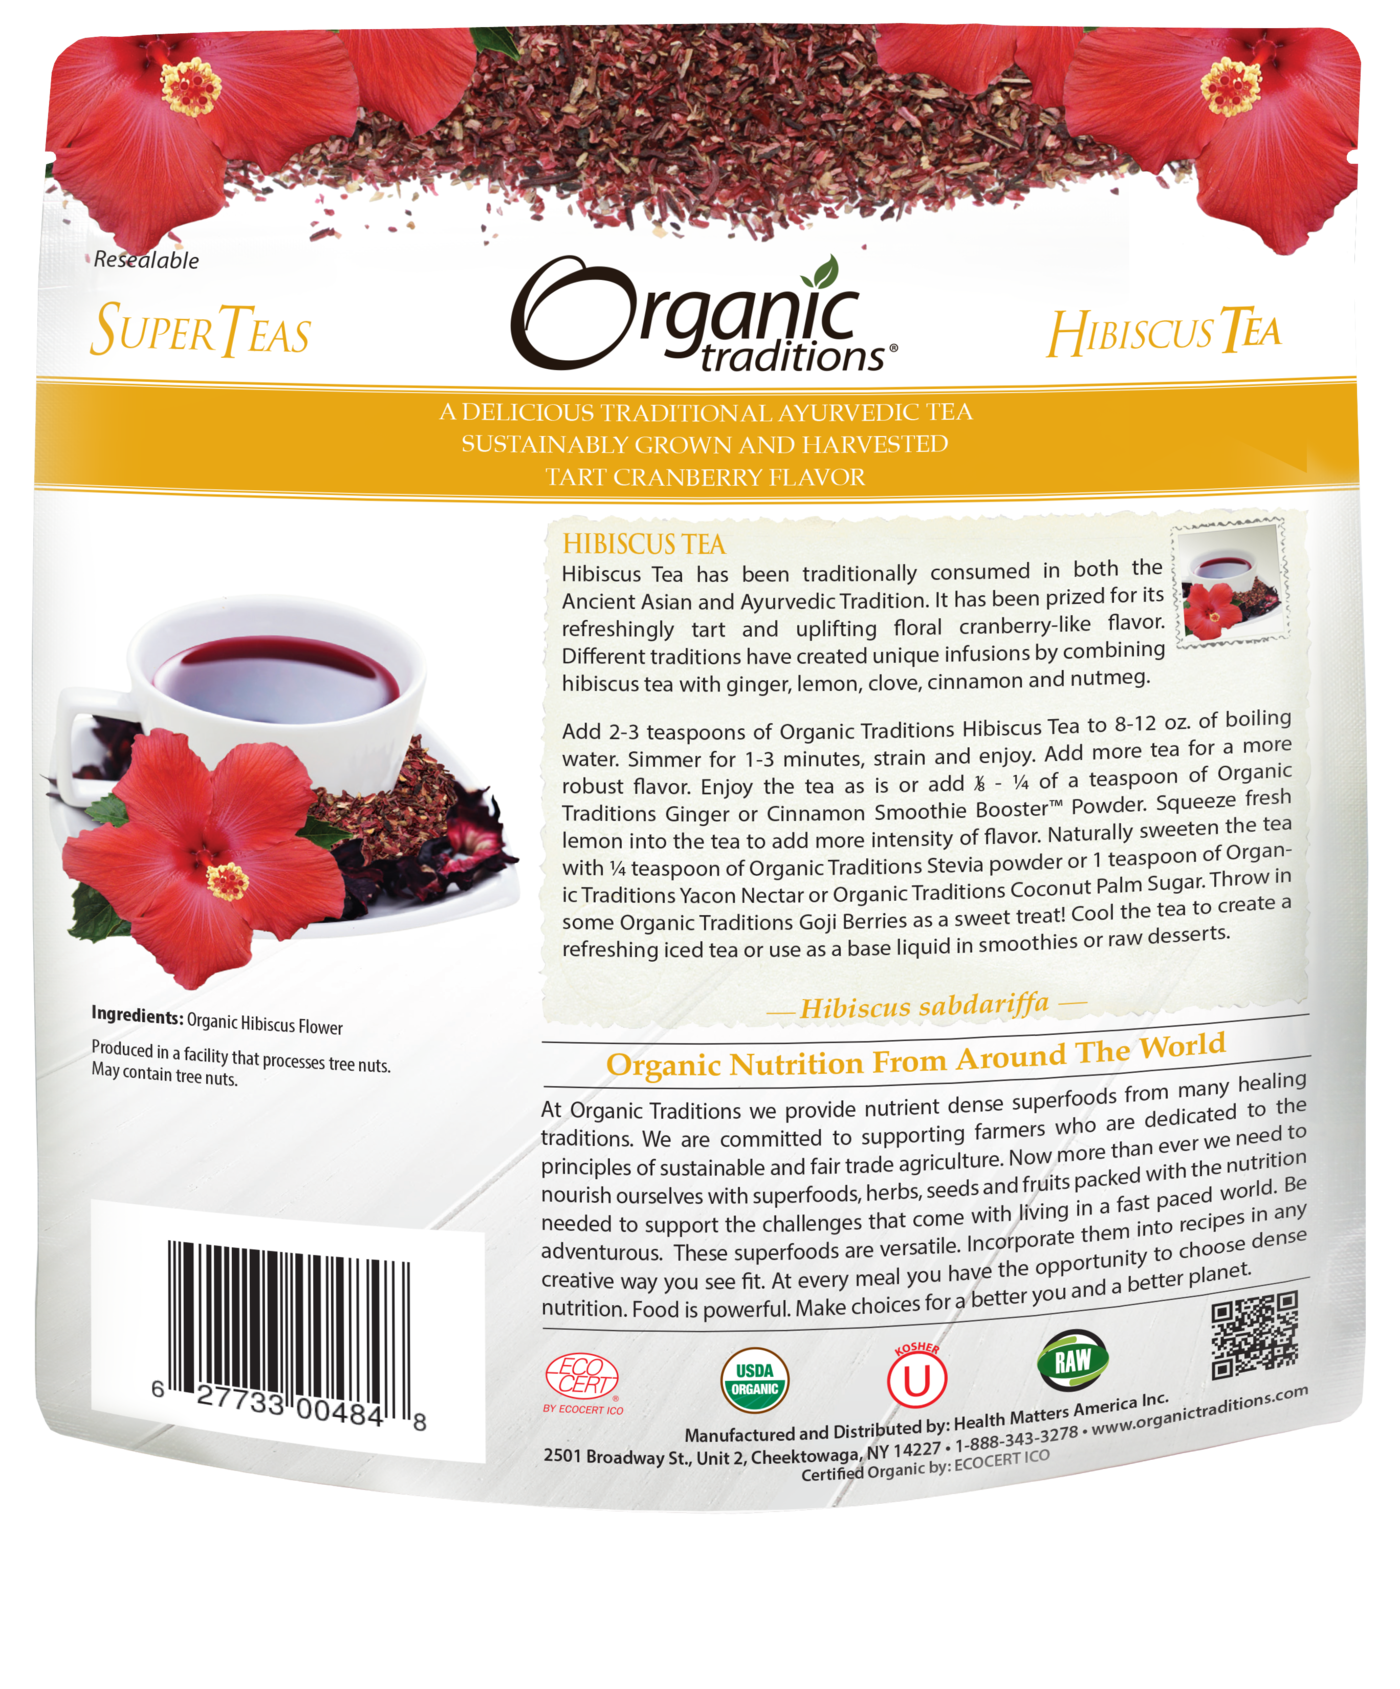 Organic Traditions Hibiscus Tea (200g) - Lifestyle Markets